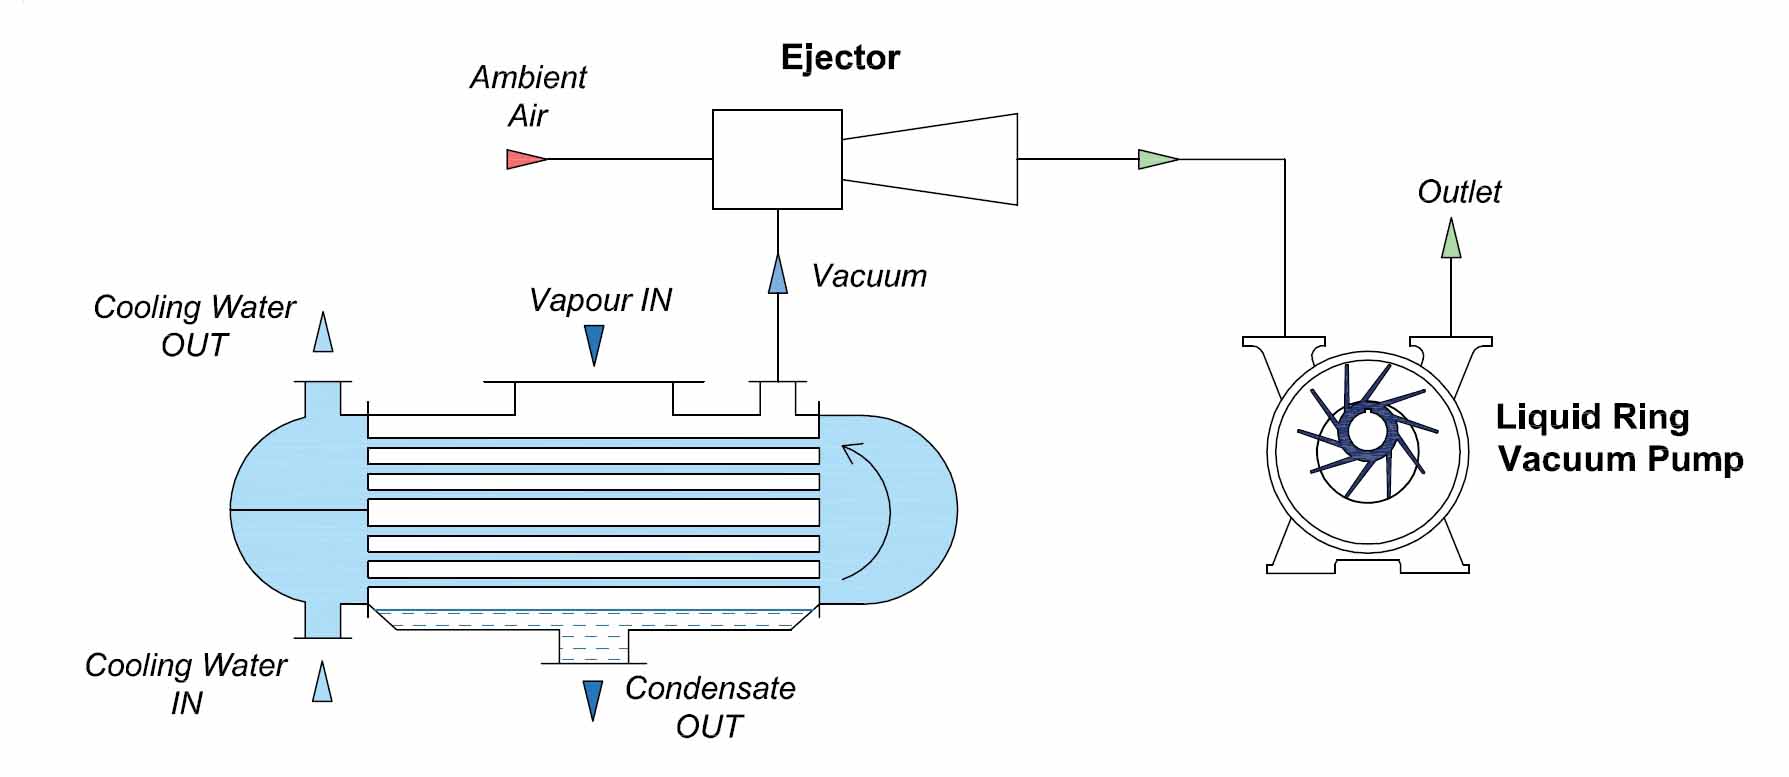 Atmospheric Air Ejector / Liquid Ring Pump Ejector for Condensor Vacuum